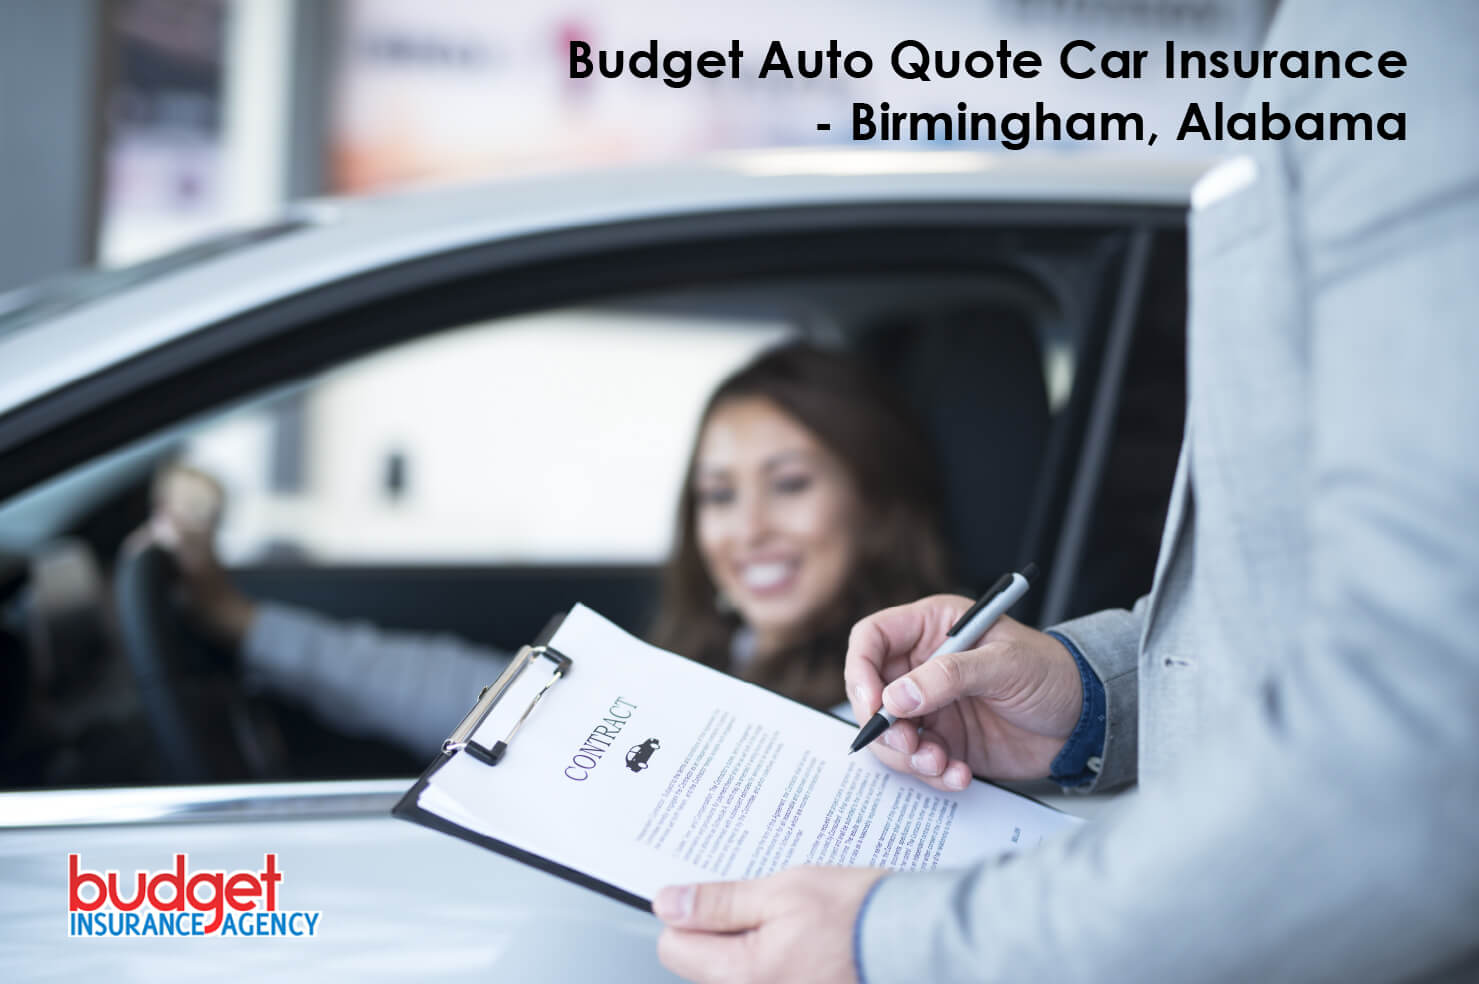 Budget Auto Quote Car Insurance - Birmingham, Alabama